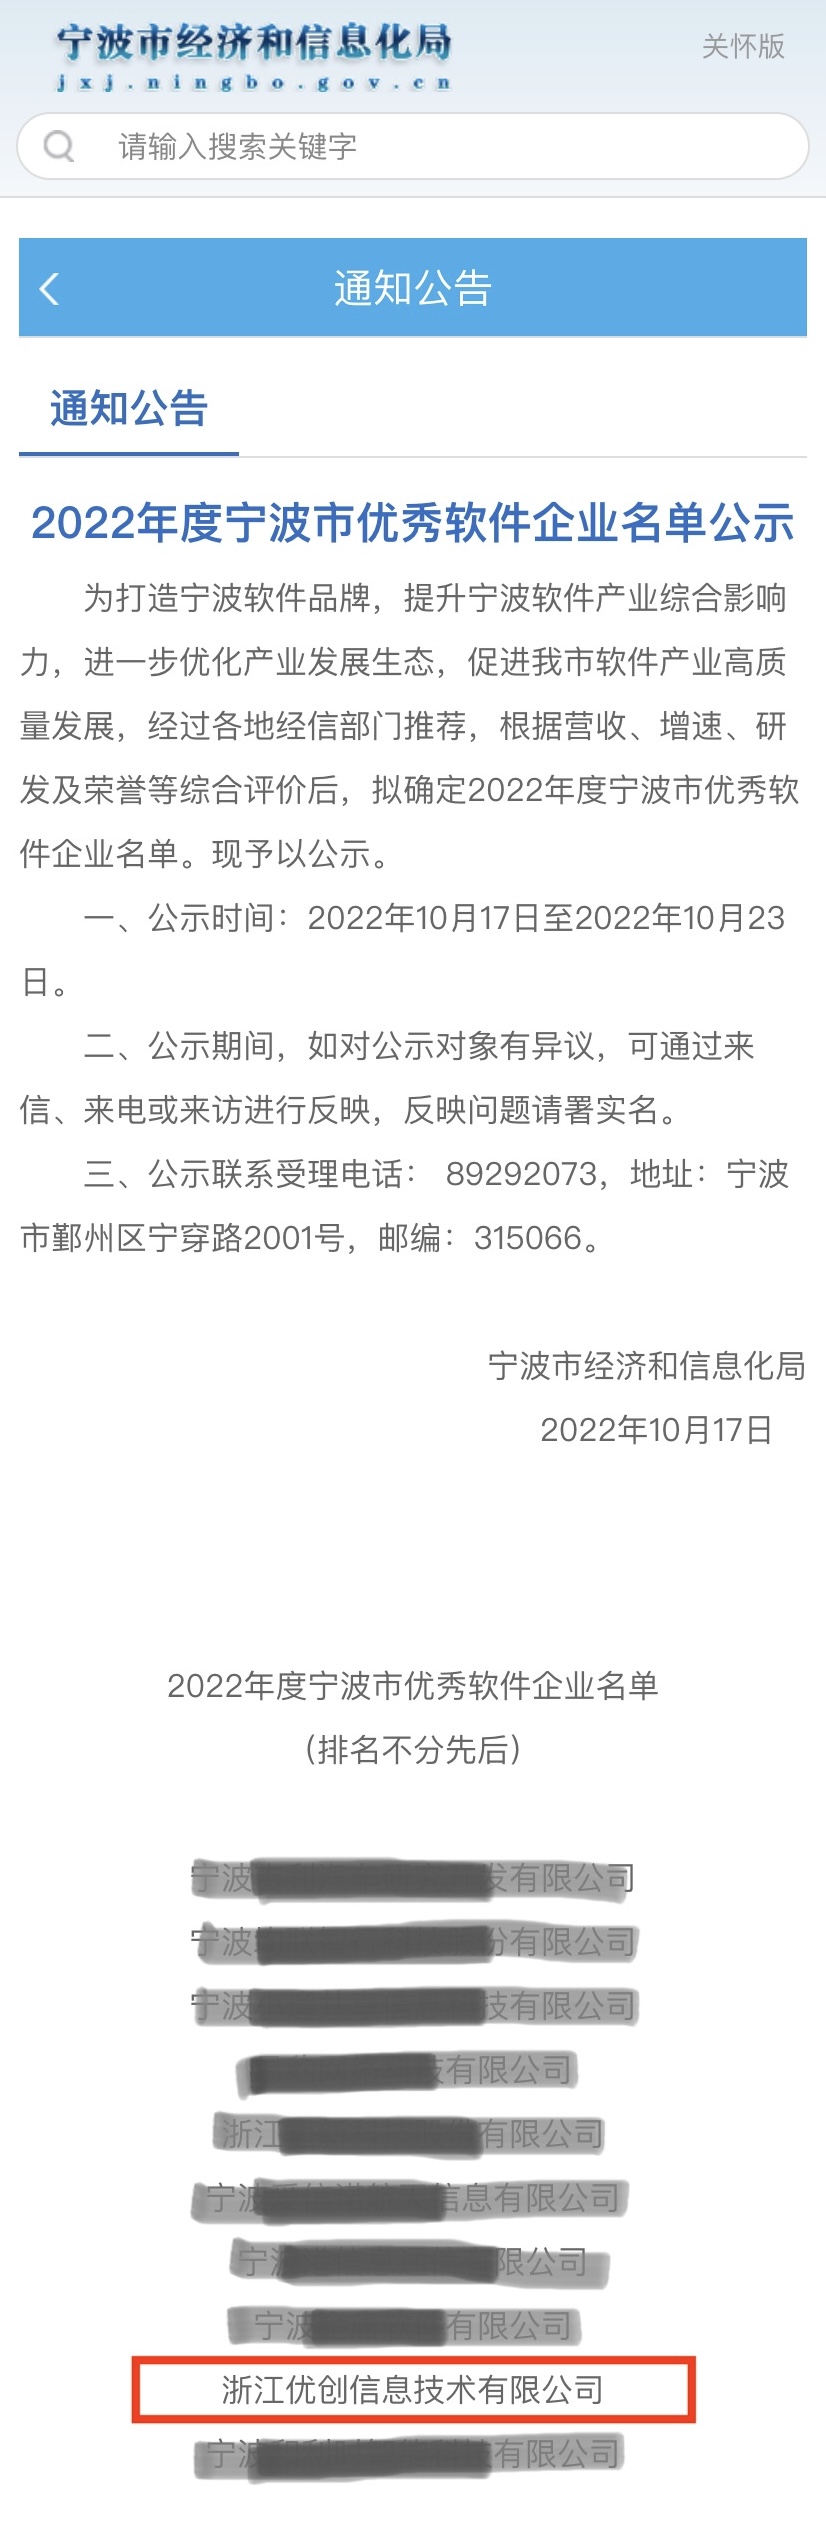 jxj.ningbo.gov.cn_art_2022_10_17_art_1229561613_58935308.html(iPhone XR)打码.jpg